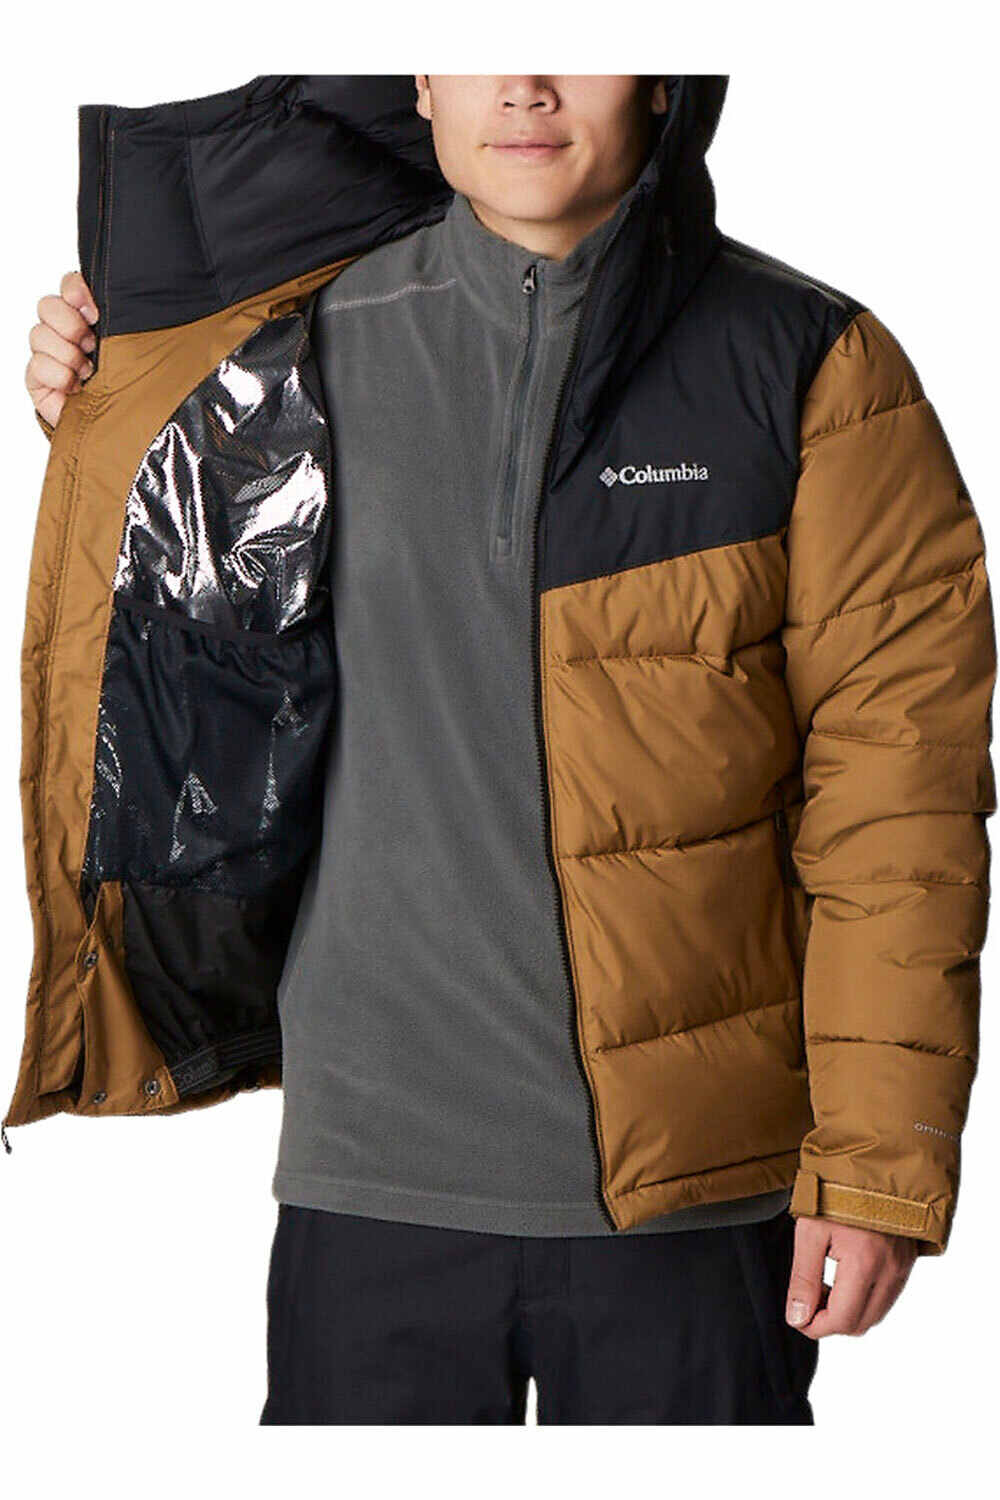 Columbia chaqueta esquí hombre Iceline Ridge Jacket vista trasera